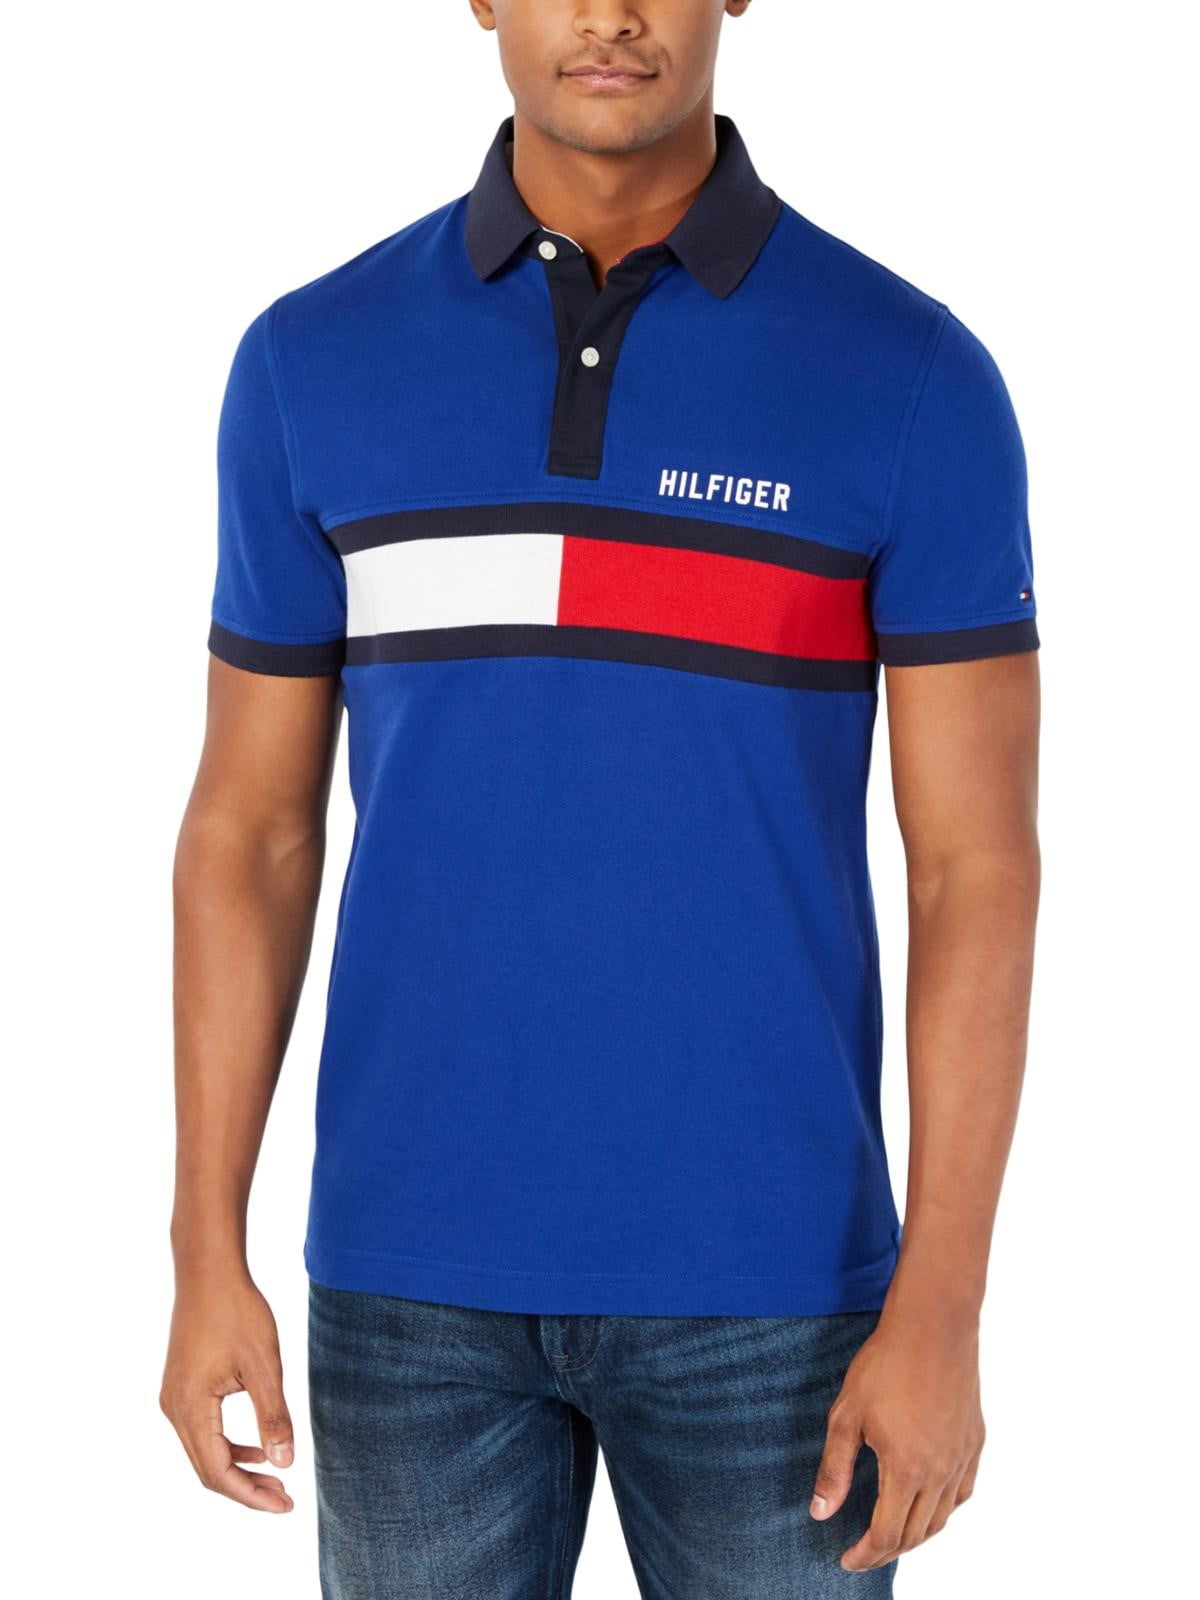 Tommy Hilfiger Men Short Sleeve Custom Fit Stripe Pique Polo Shirt $0 Free Ship